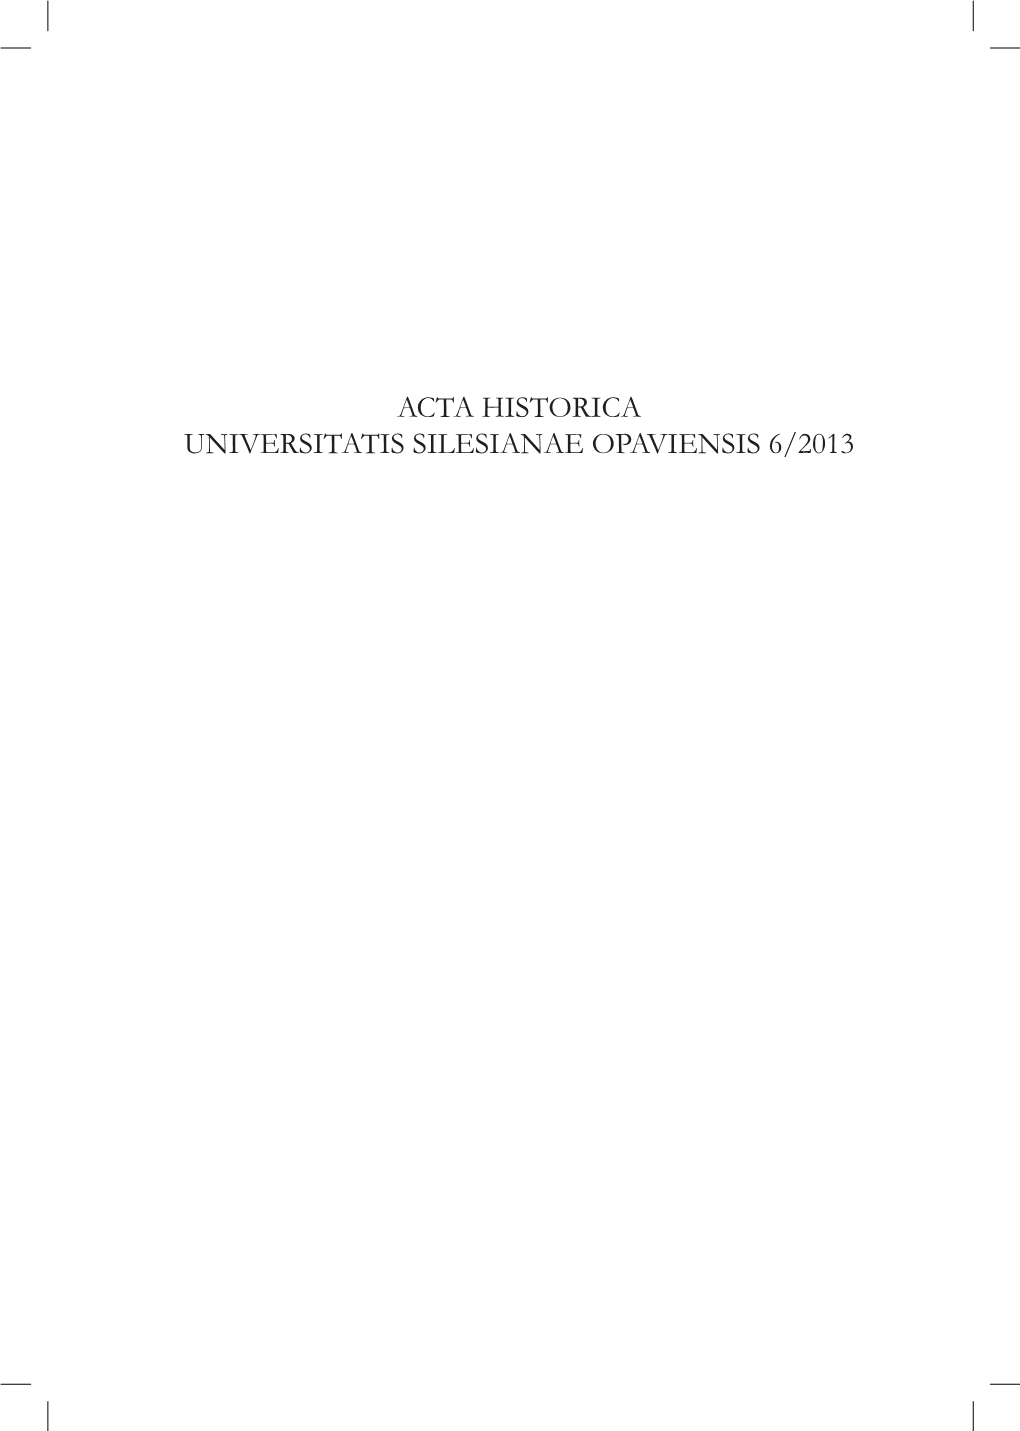 ACTA HISTORICA UNIVERSITATIS SILESIANAE OPAVIENSIS 6/2013 Toto Číslo Bylo Financováno Z Projektu